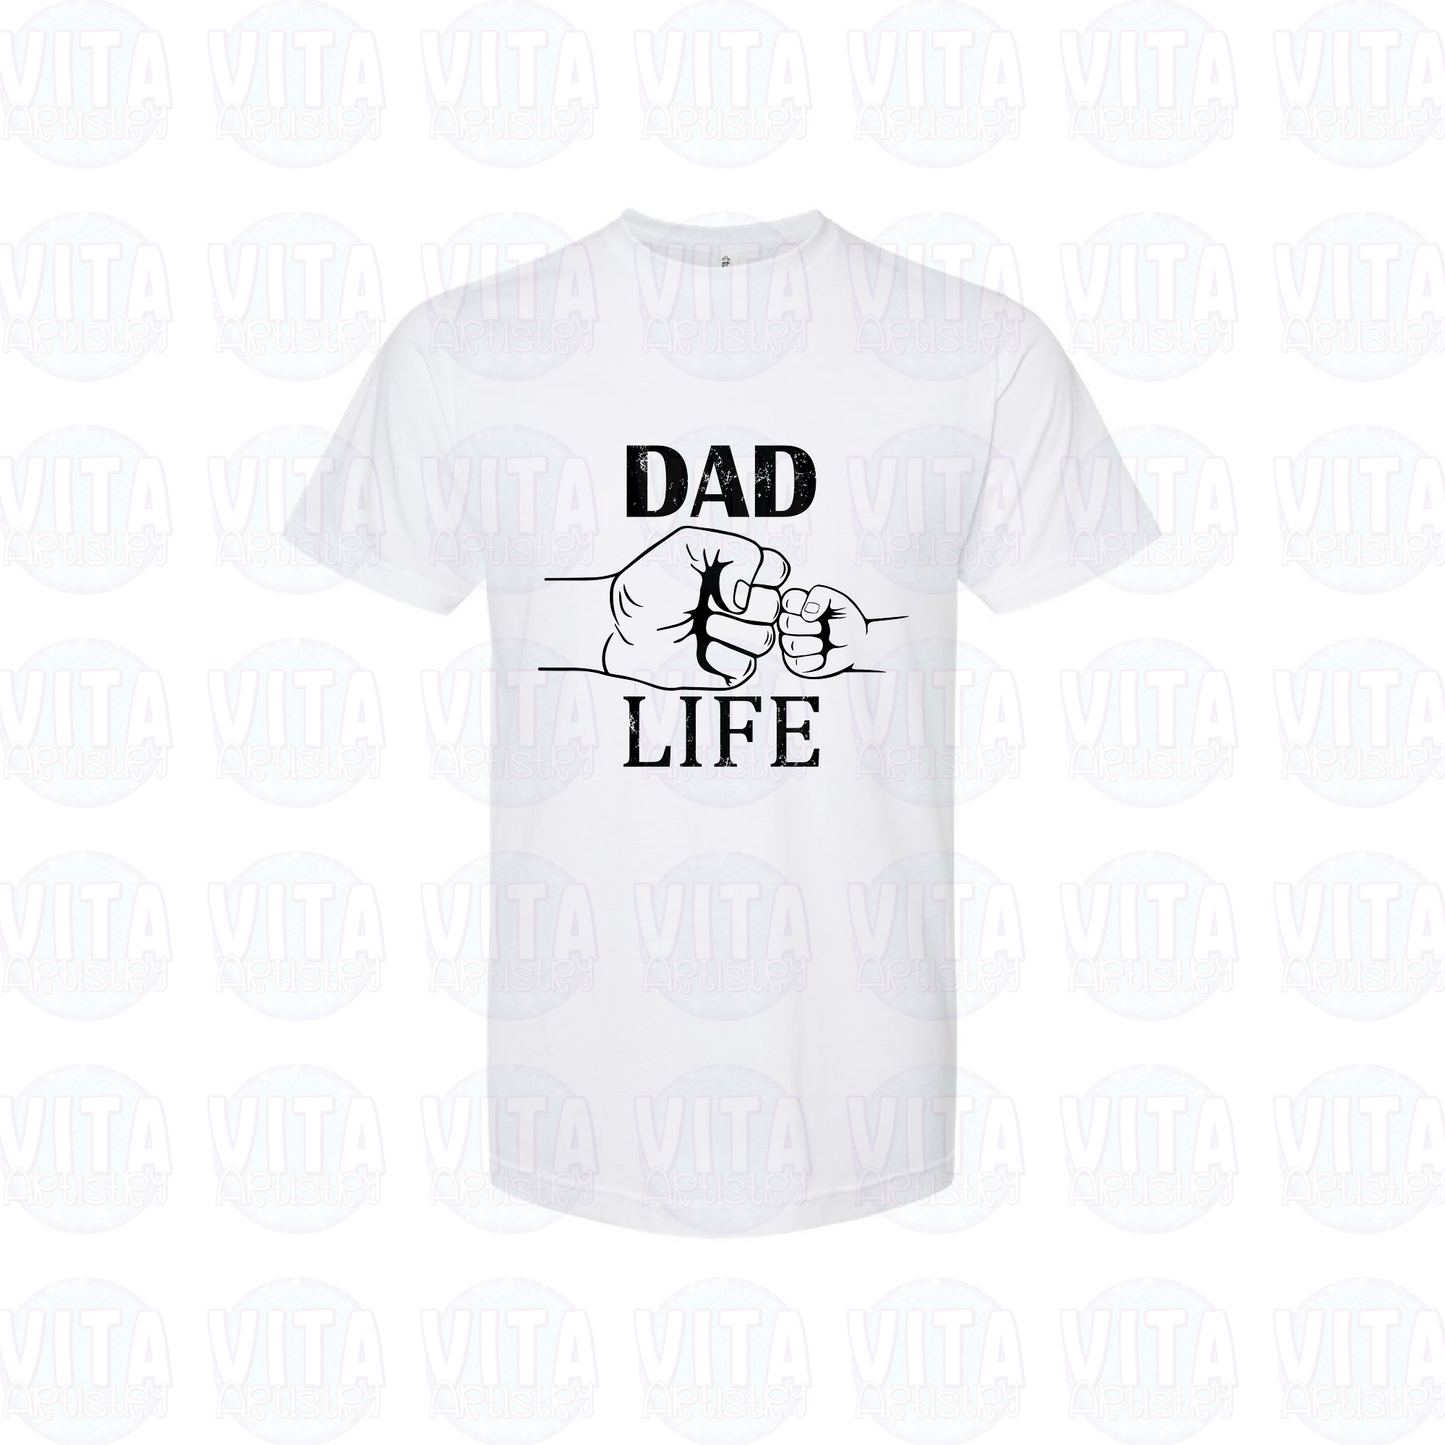 Dad Life - Male Soft Style Crewneck (Choose your shirt color)